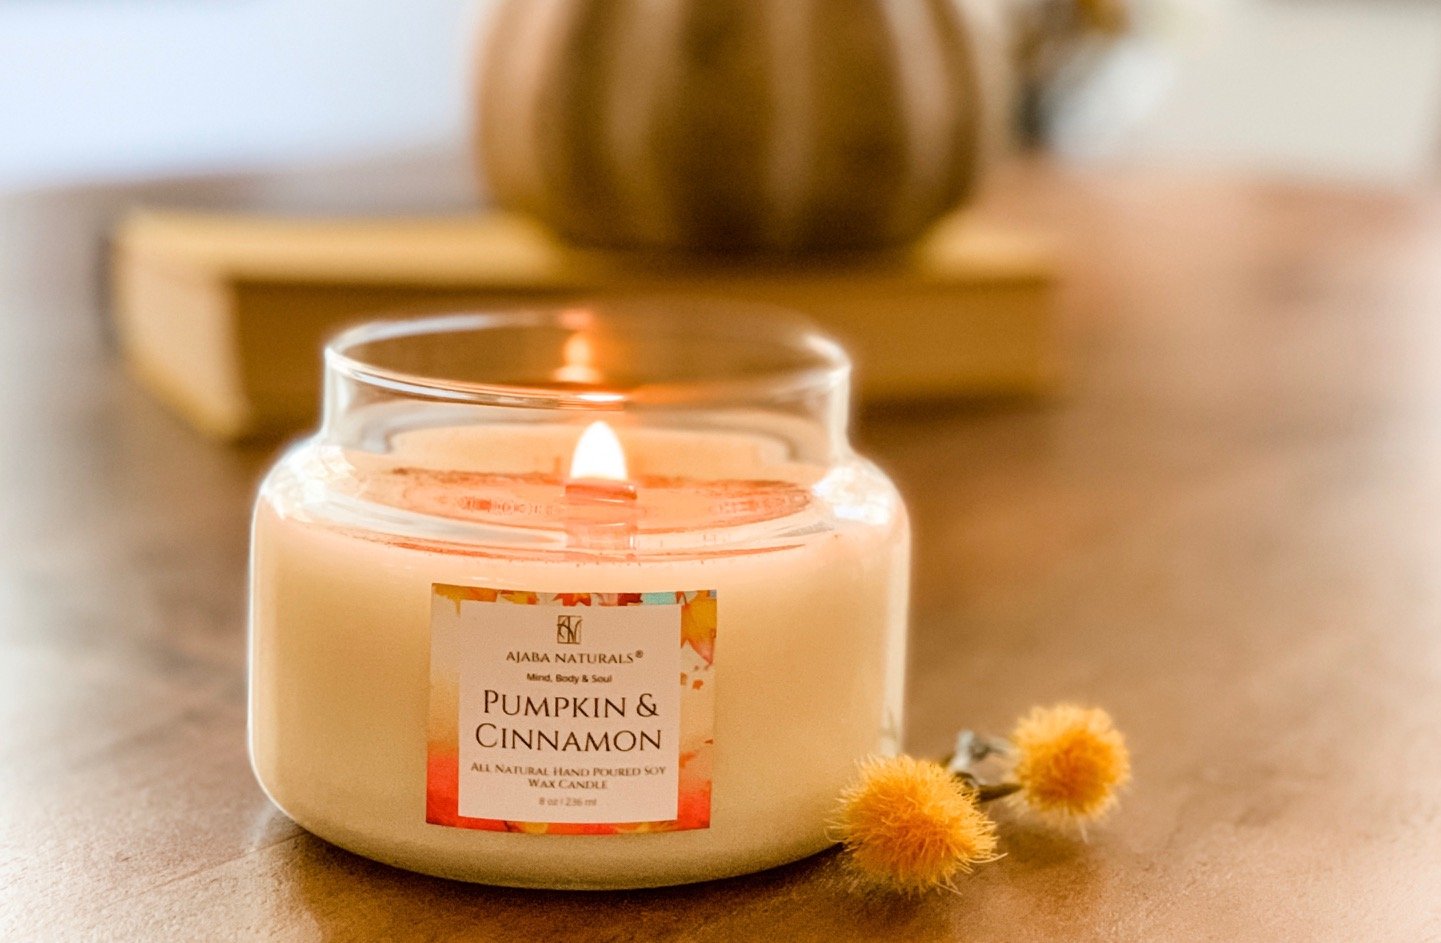 Pumpkin & Cinnamon All Natural Soy Wax Candle Candle AJABA NATURALS® 